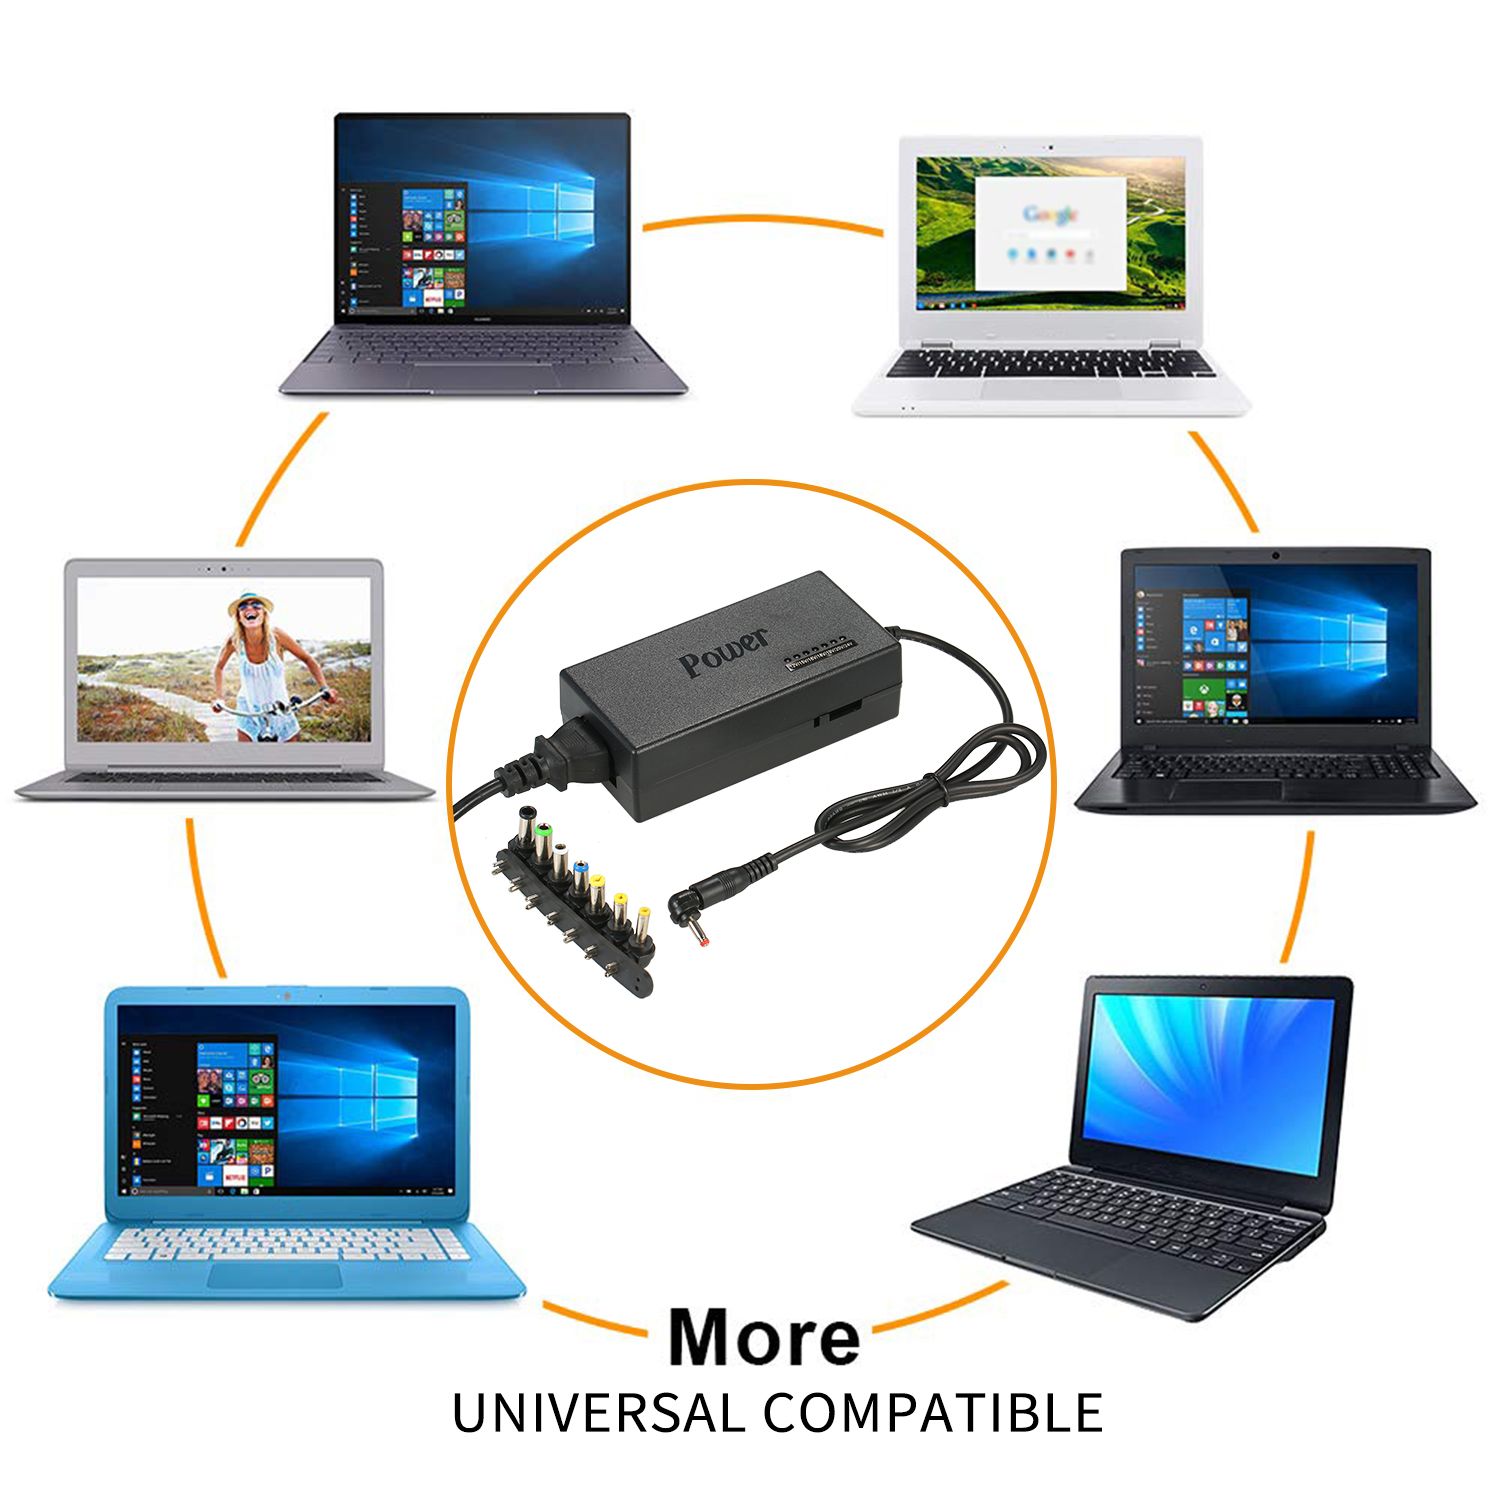 96W Universal Laptop Power Charger Adapter 8Pcs 12V to 24V - EU Plug